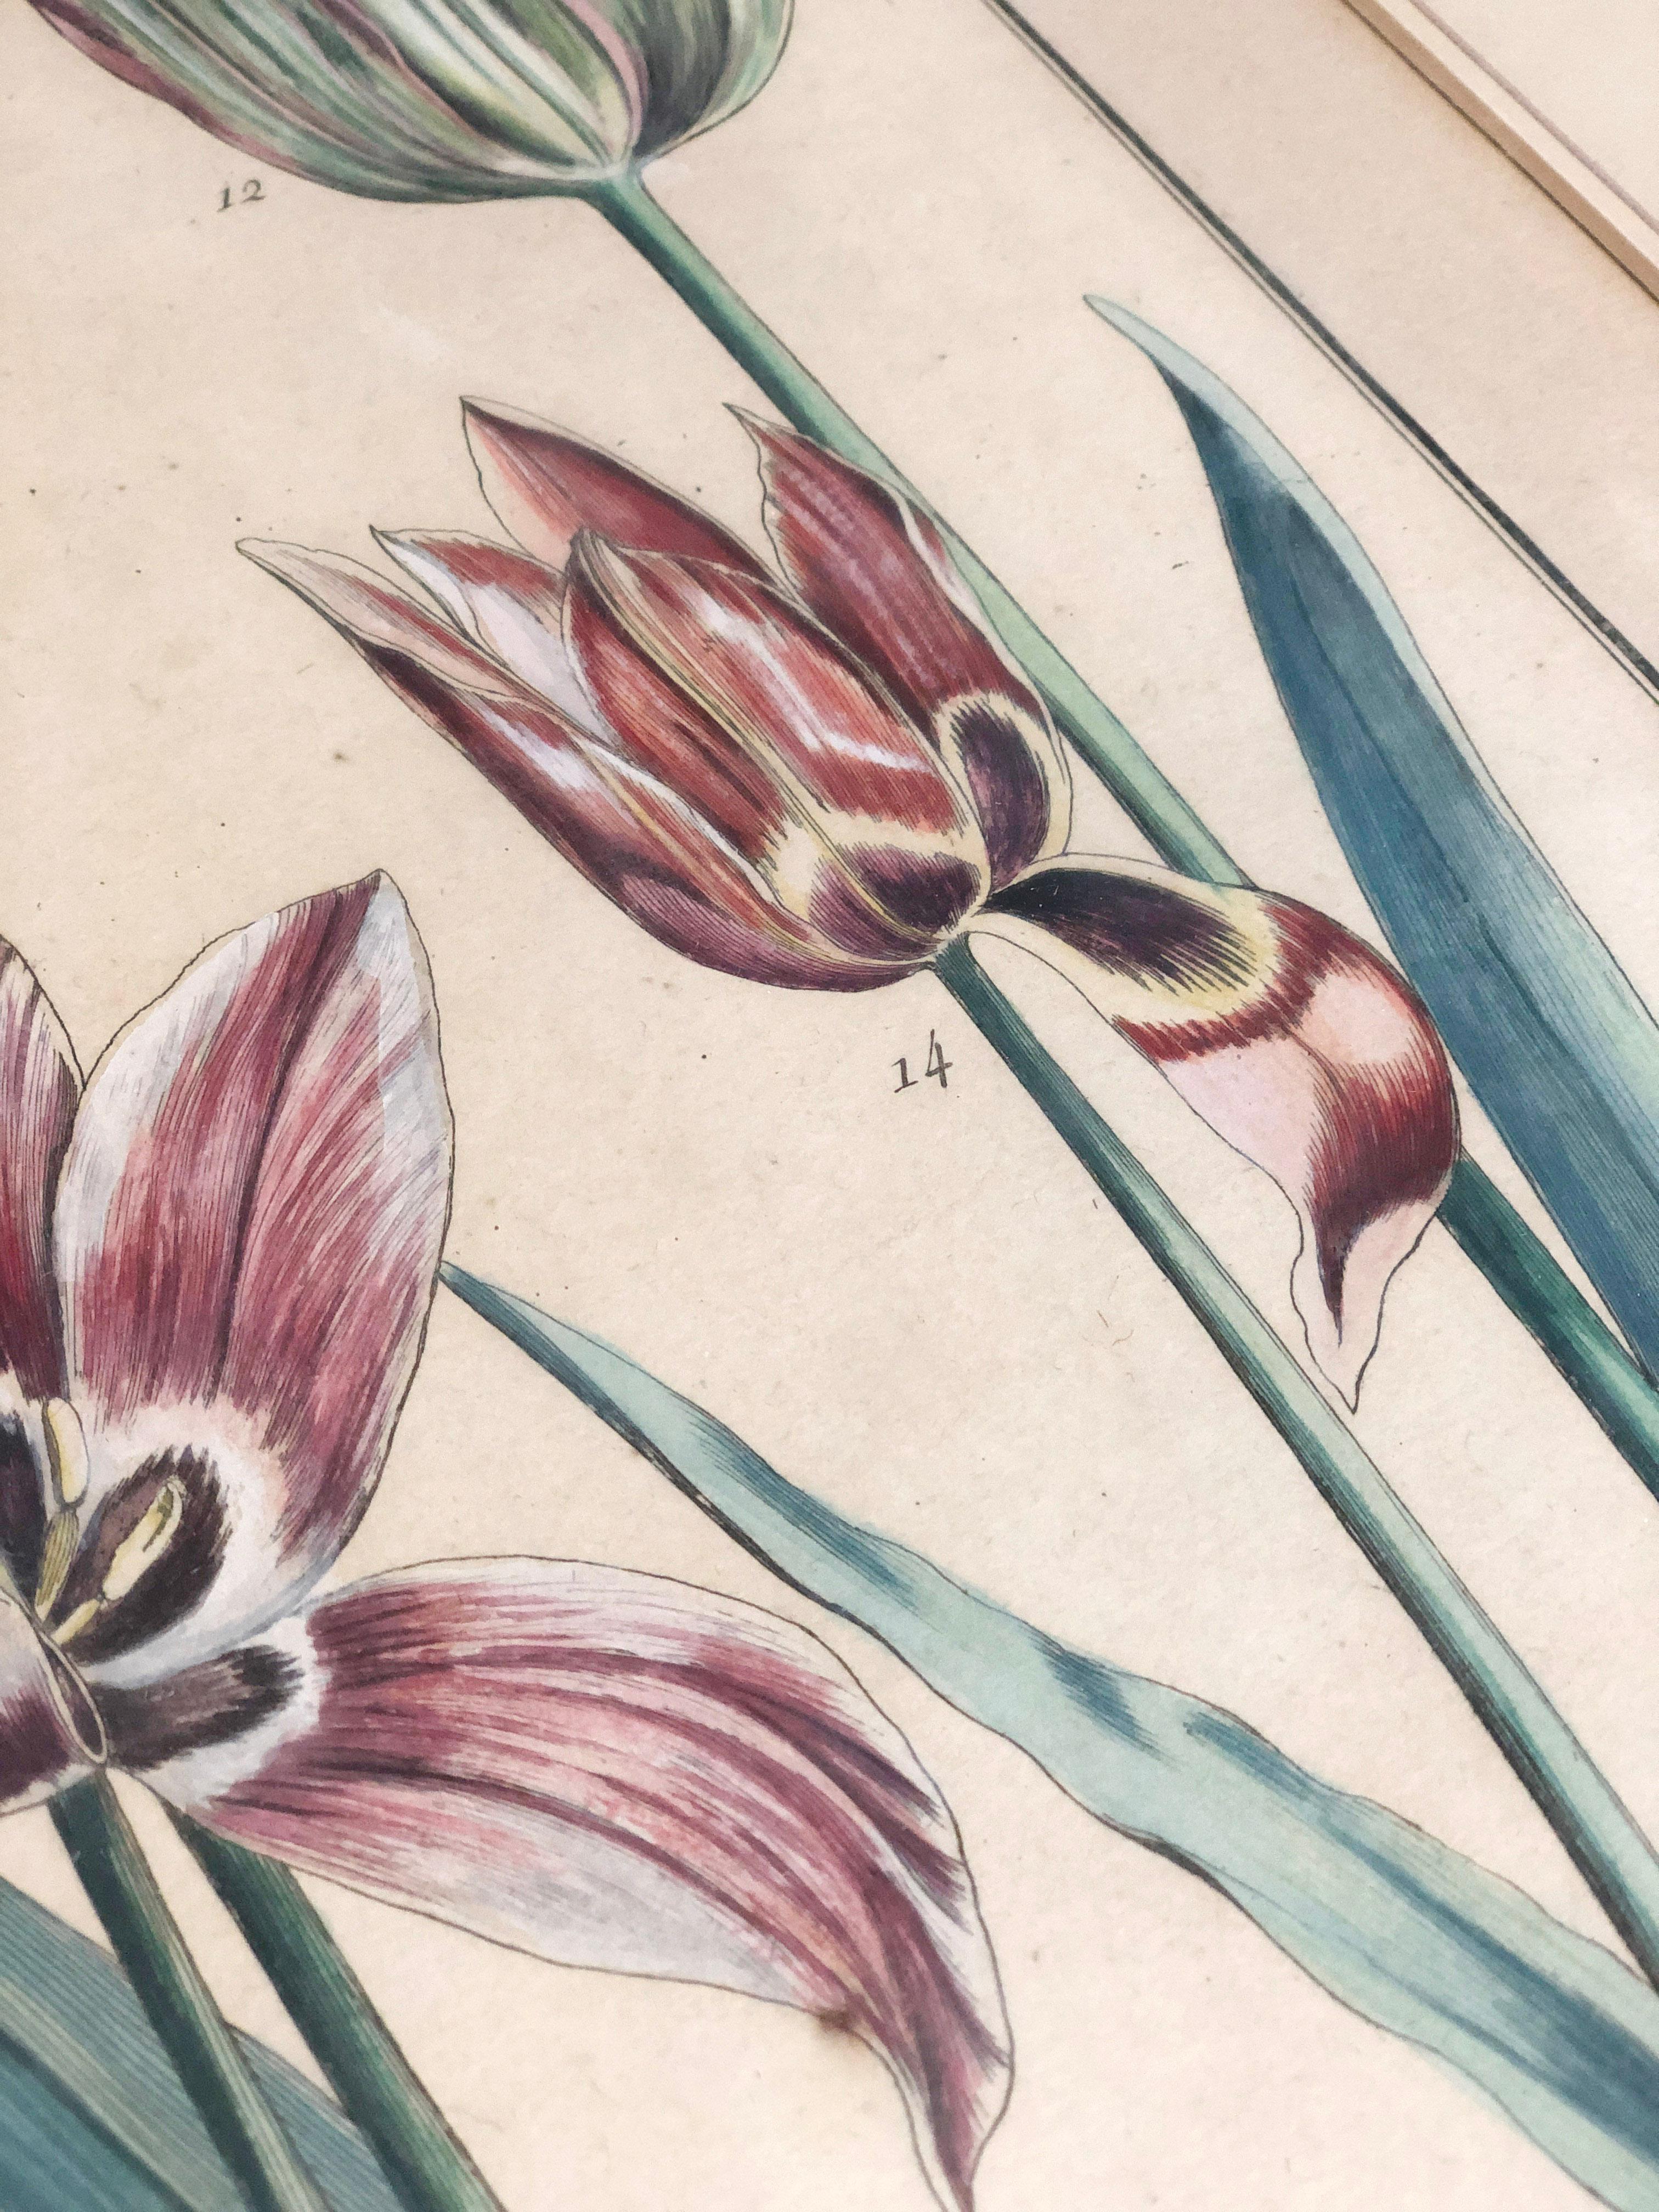 18th Century Emanuel Sweert - Maria Merian - Daniel Rabel - Copper engraving 4 tulips plate 5 For Sale